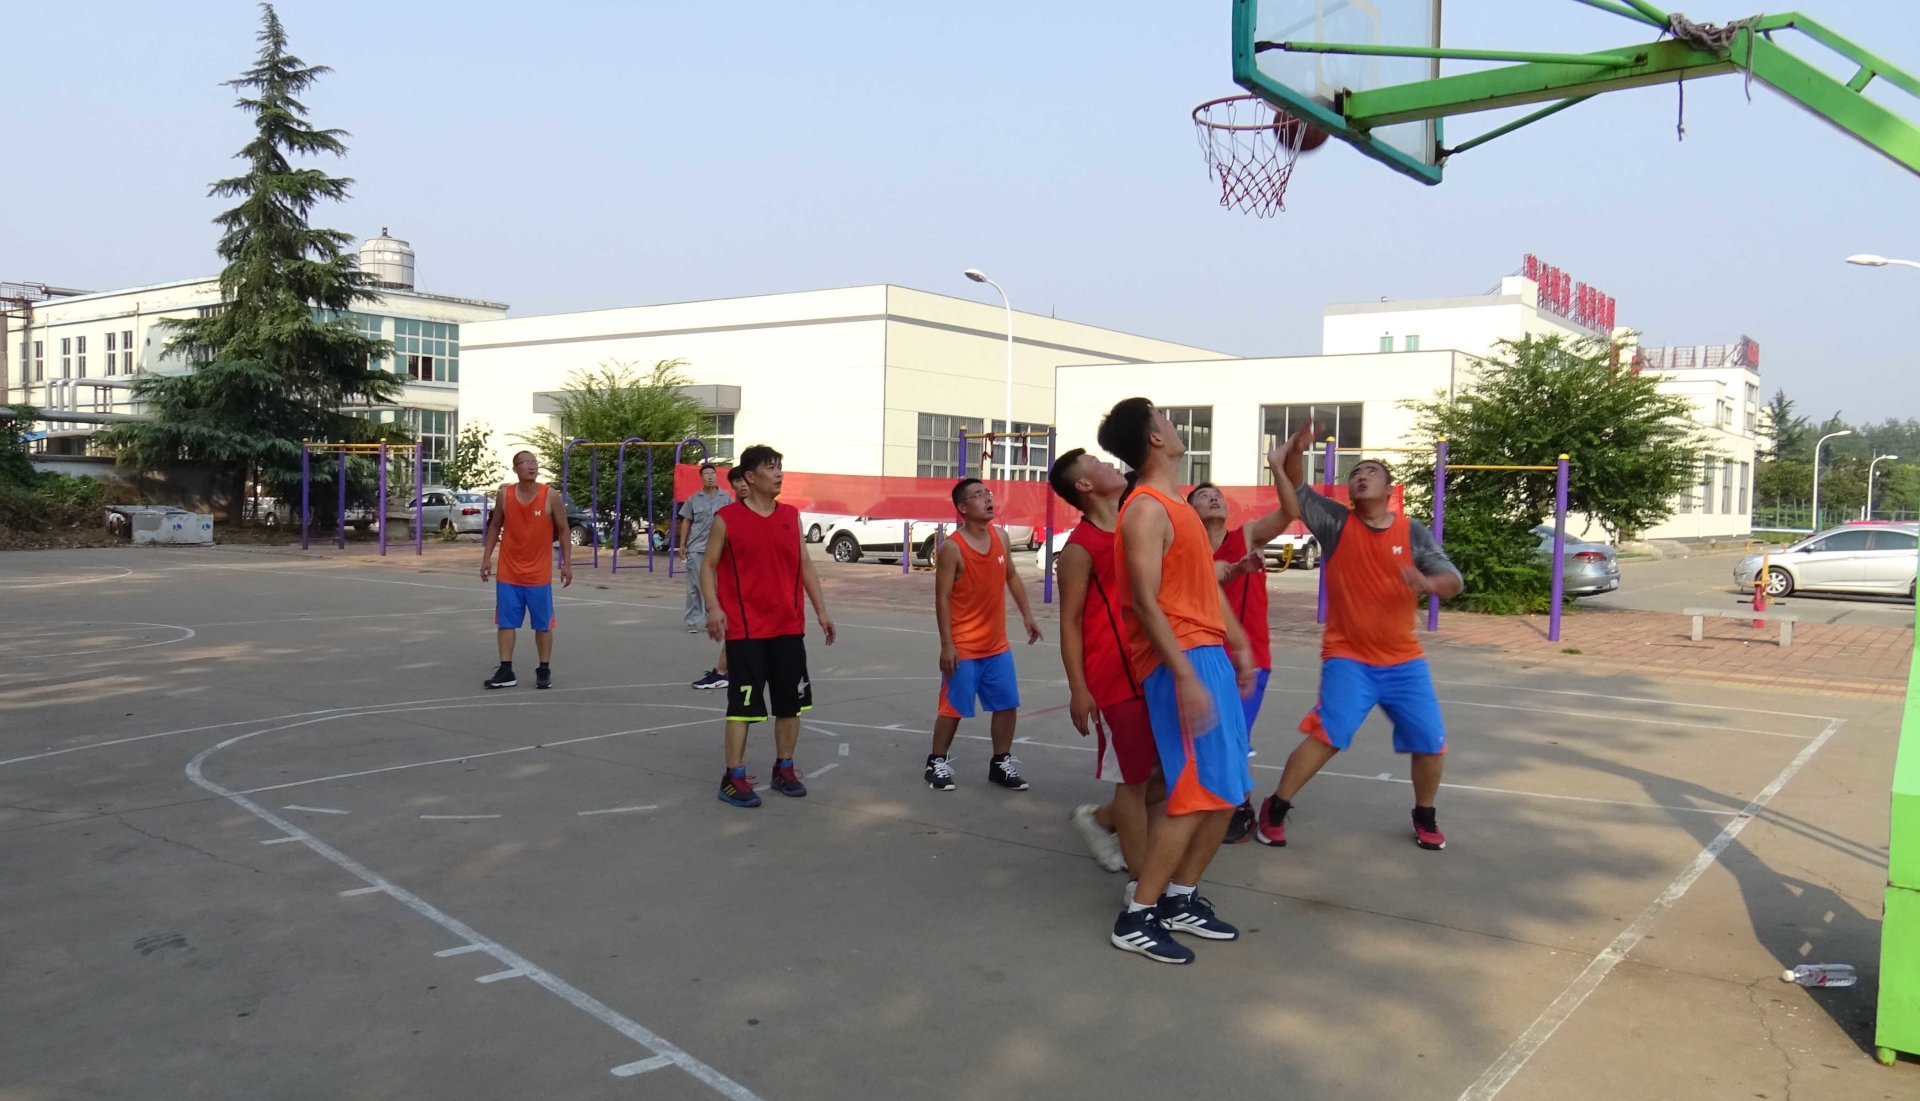 Kemet company staff basketball court bright style